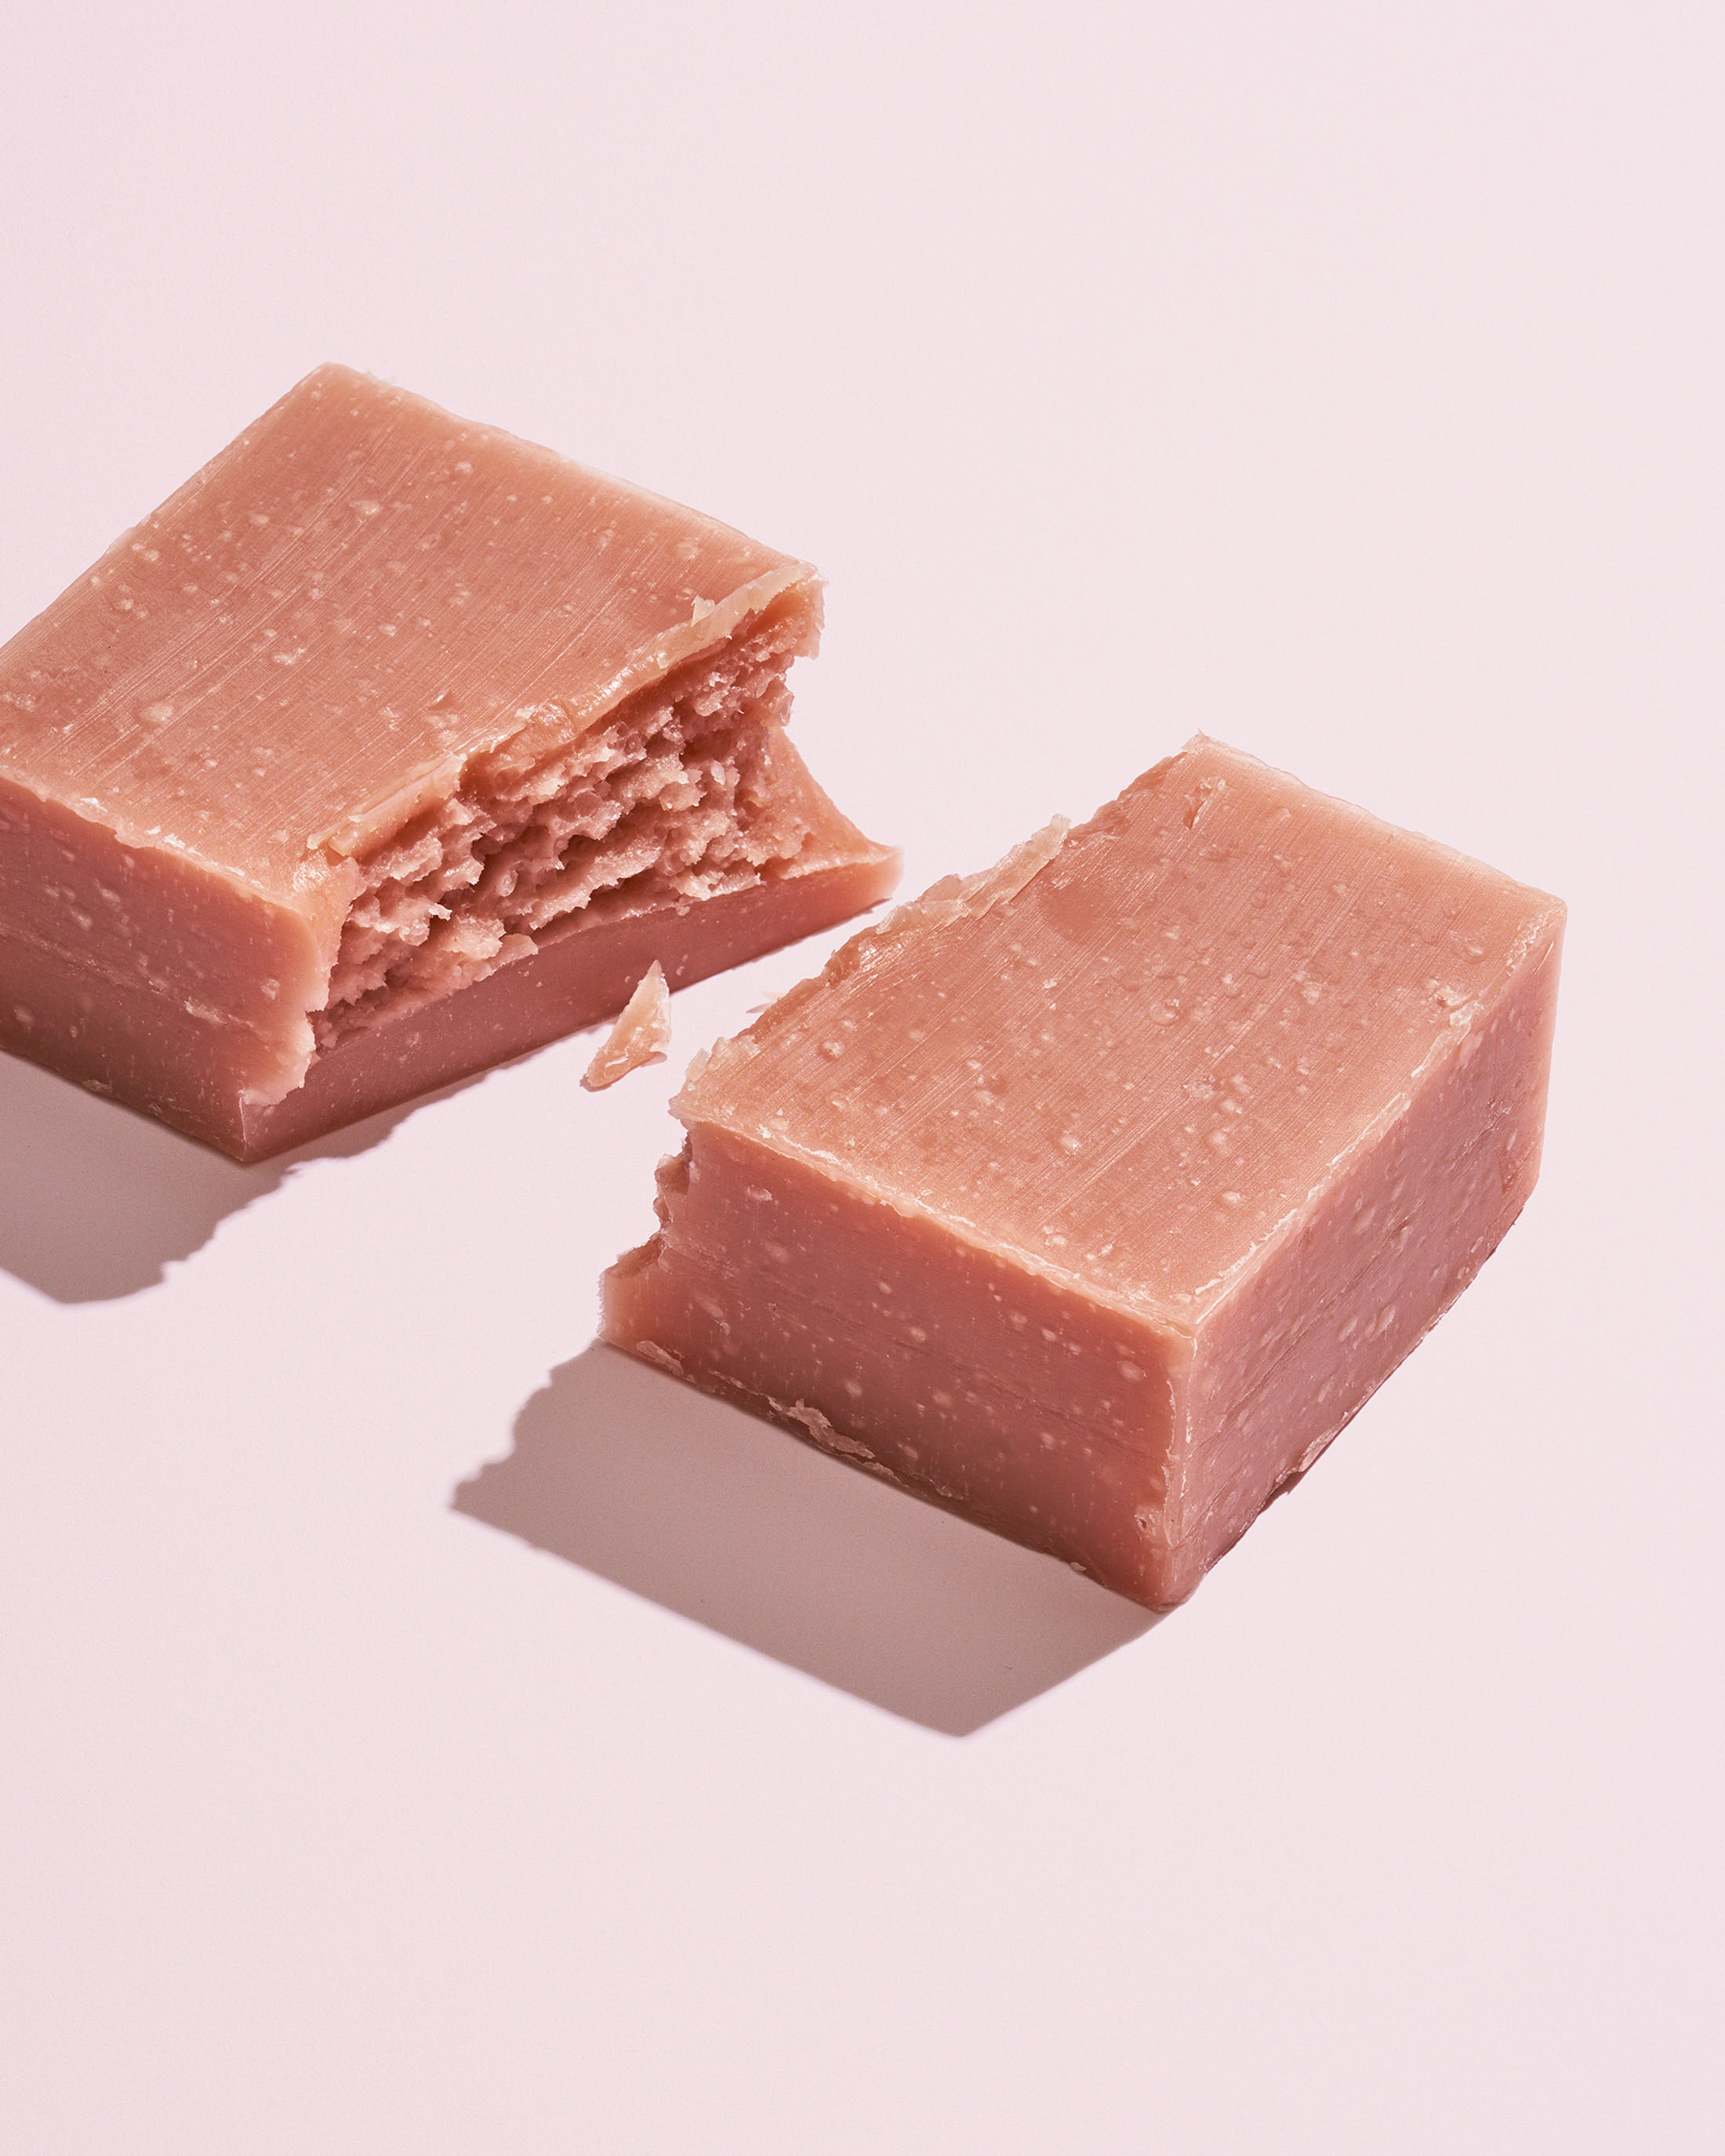 STAN Herbivore Pink Clay Soap bar